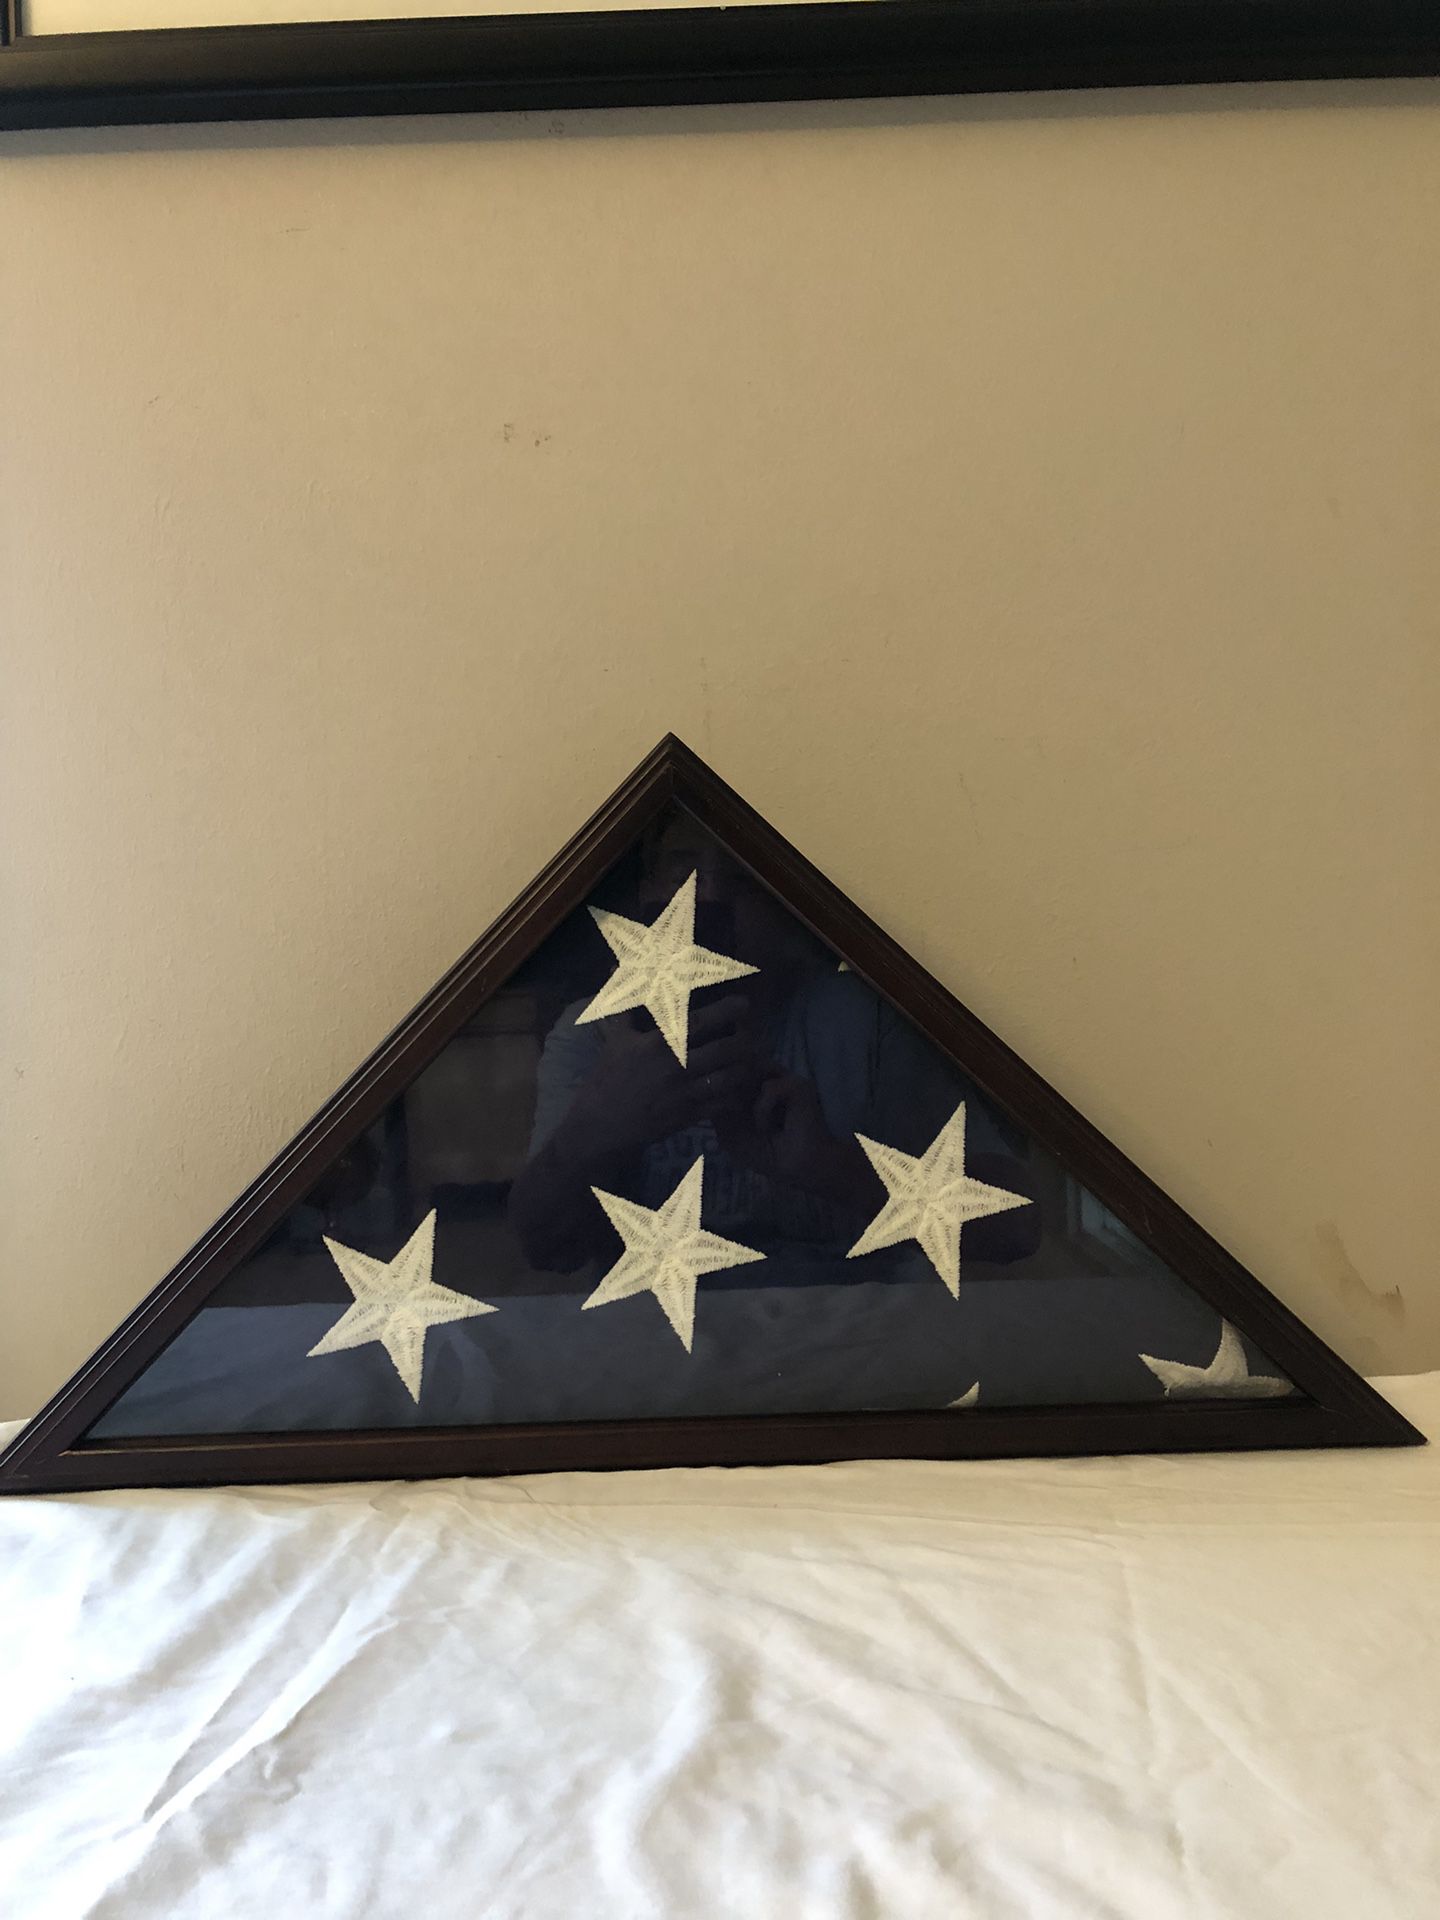  Flag Display Case Wood And Glass FREE USA FLAG 